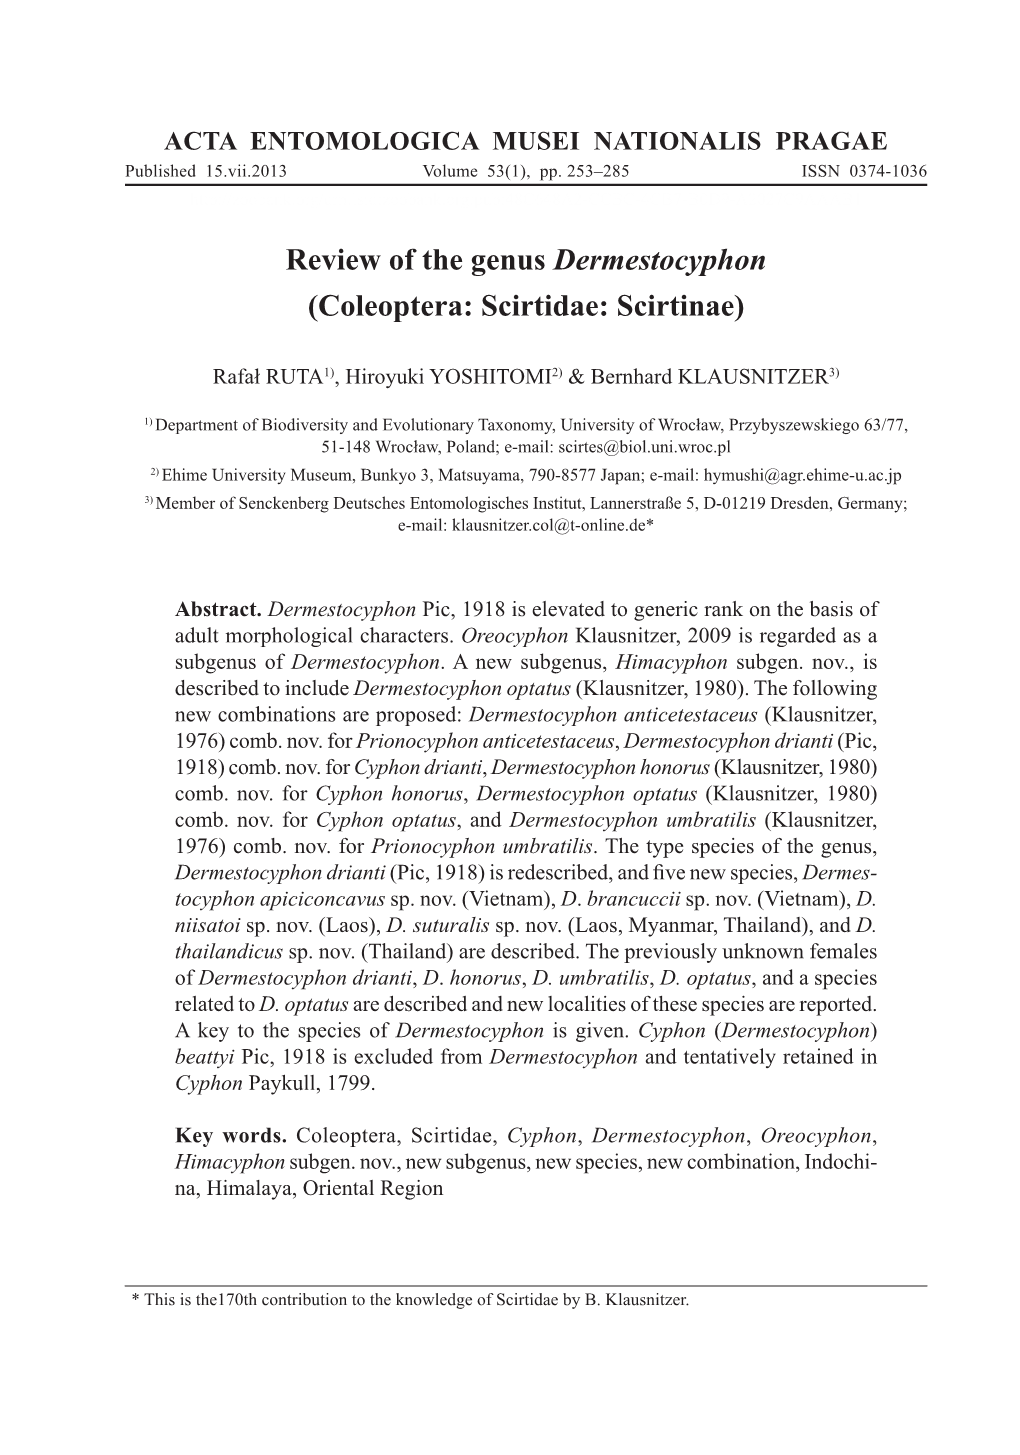 Review of the Genus Dermestocyphon (Coleoptera: Scirtidae: Scirtinae)